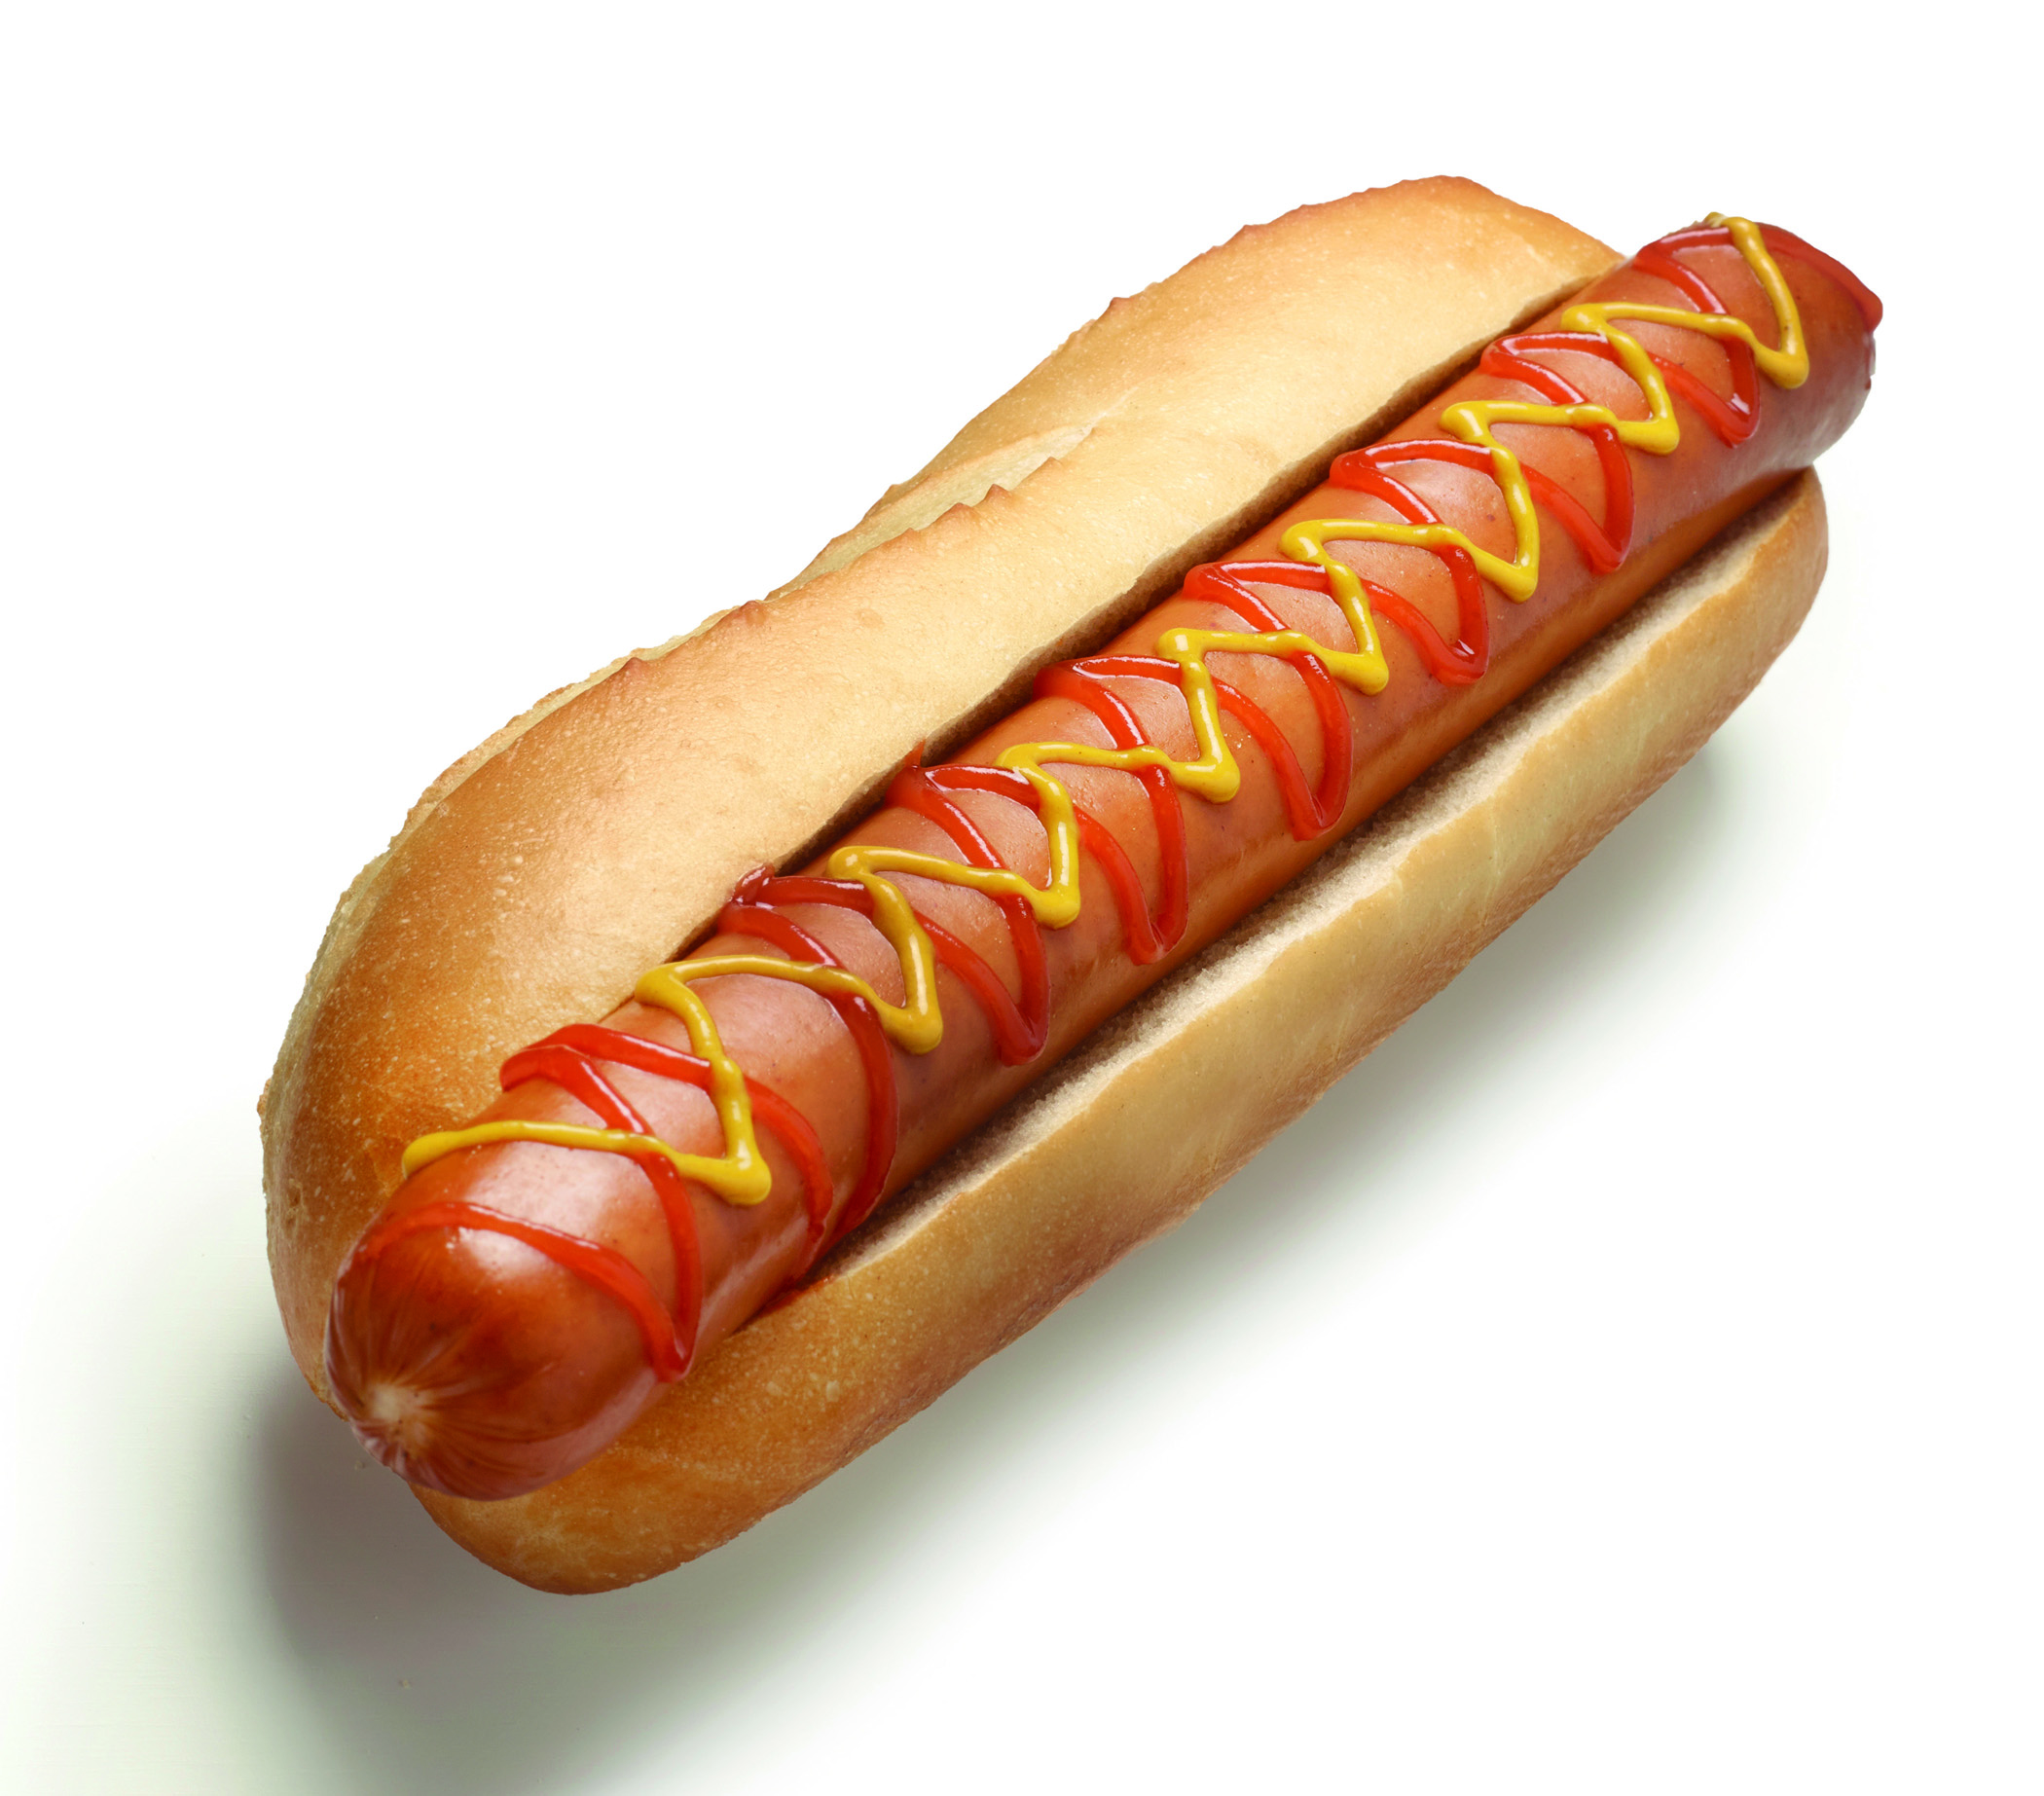 Country Choice adds Halal hotdog to Hudson’s range